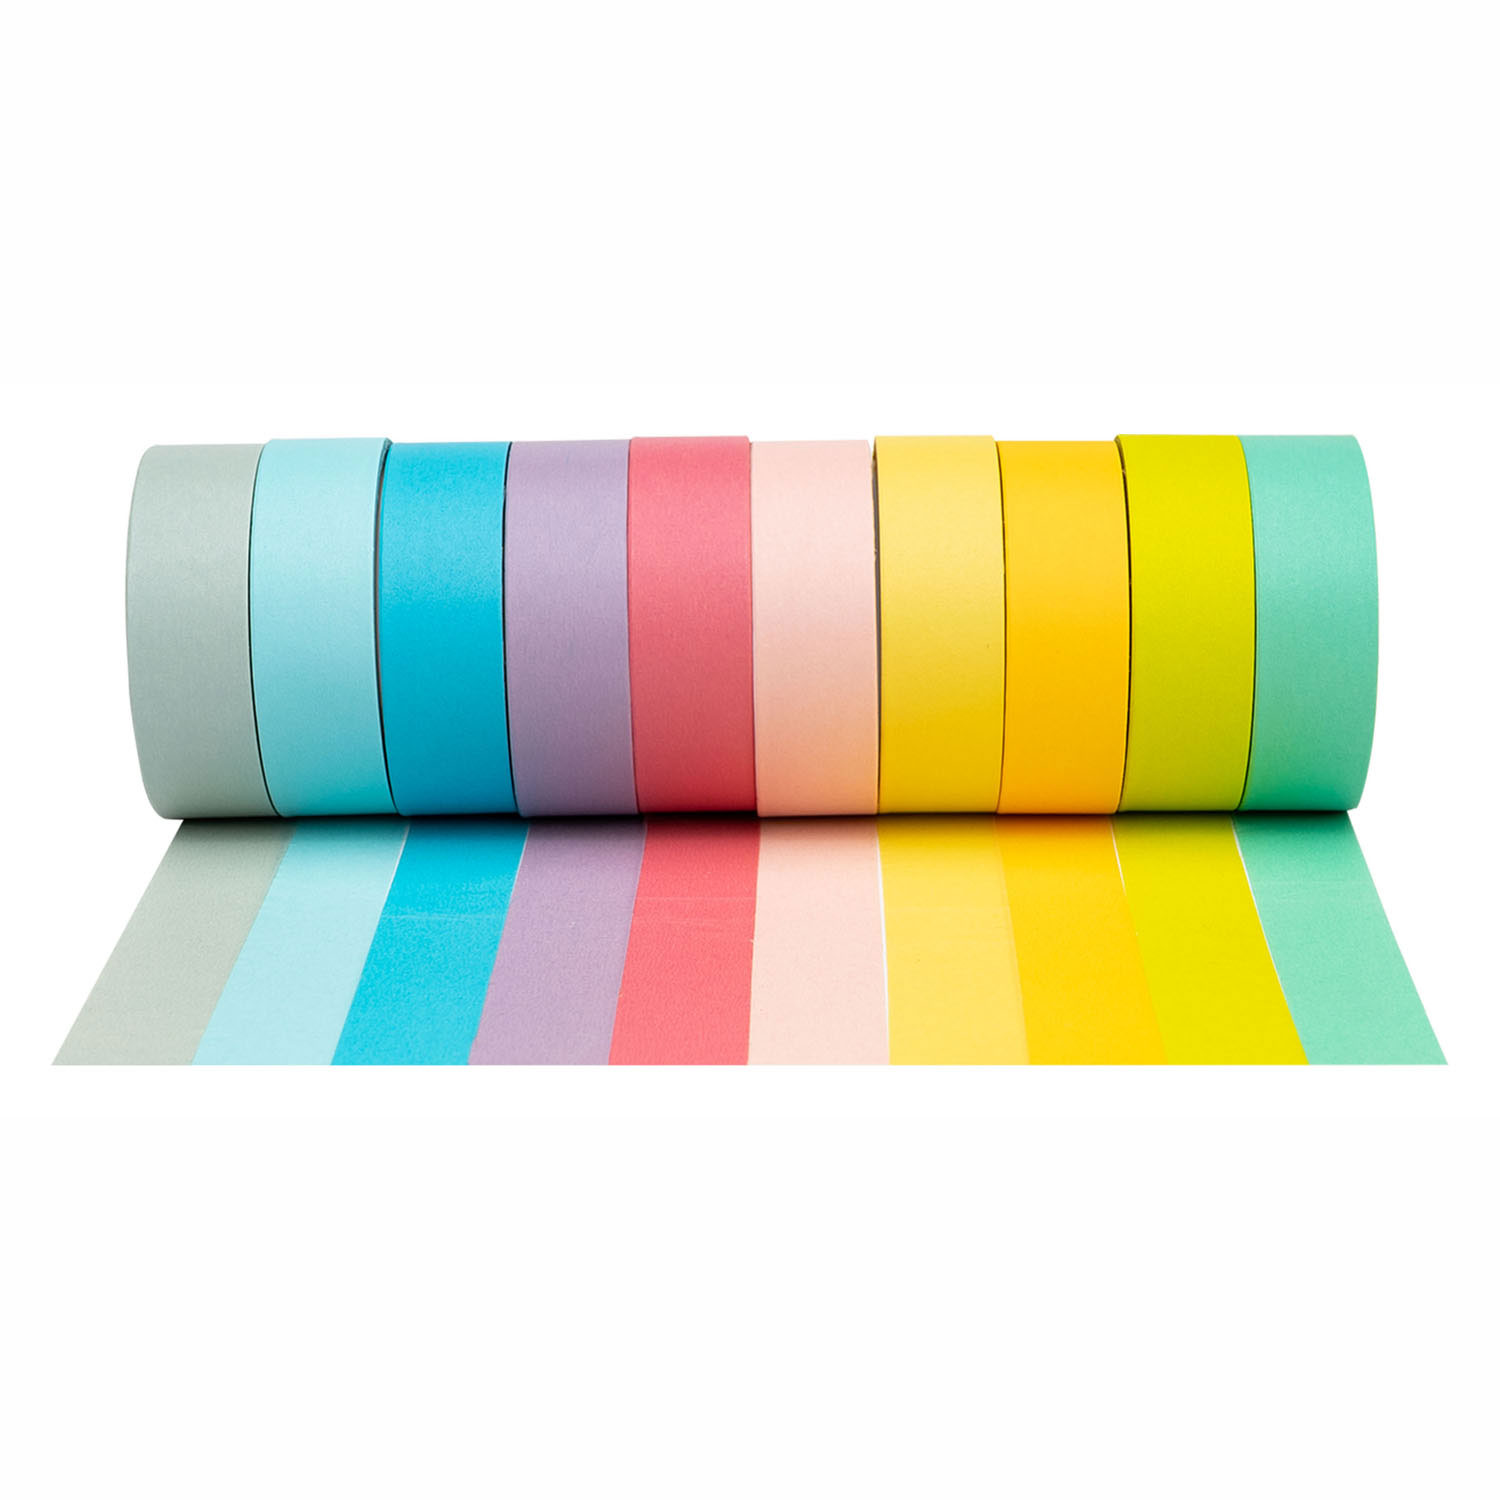 Colorations Washi Tape Pastel Kleuren, Set van 10